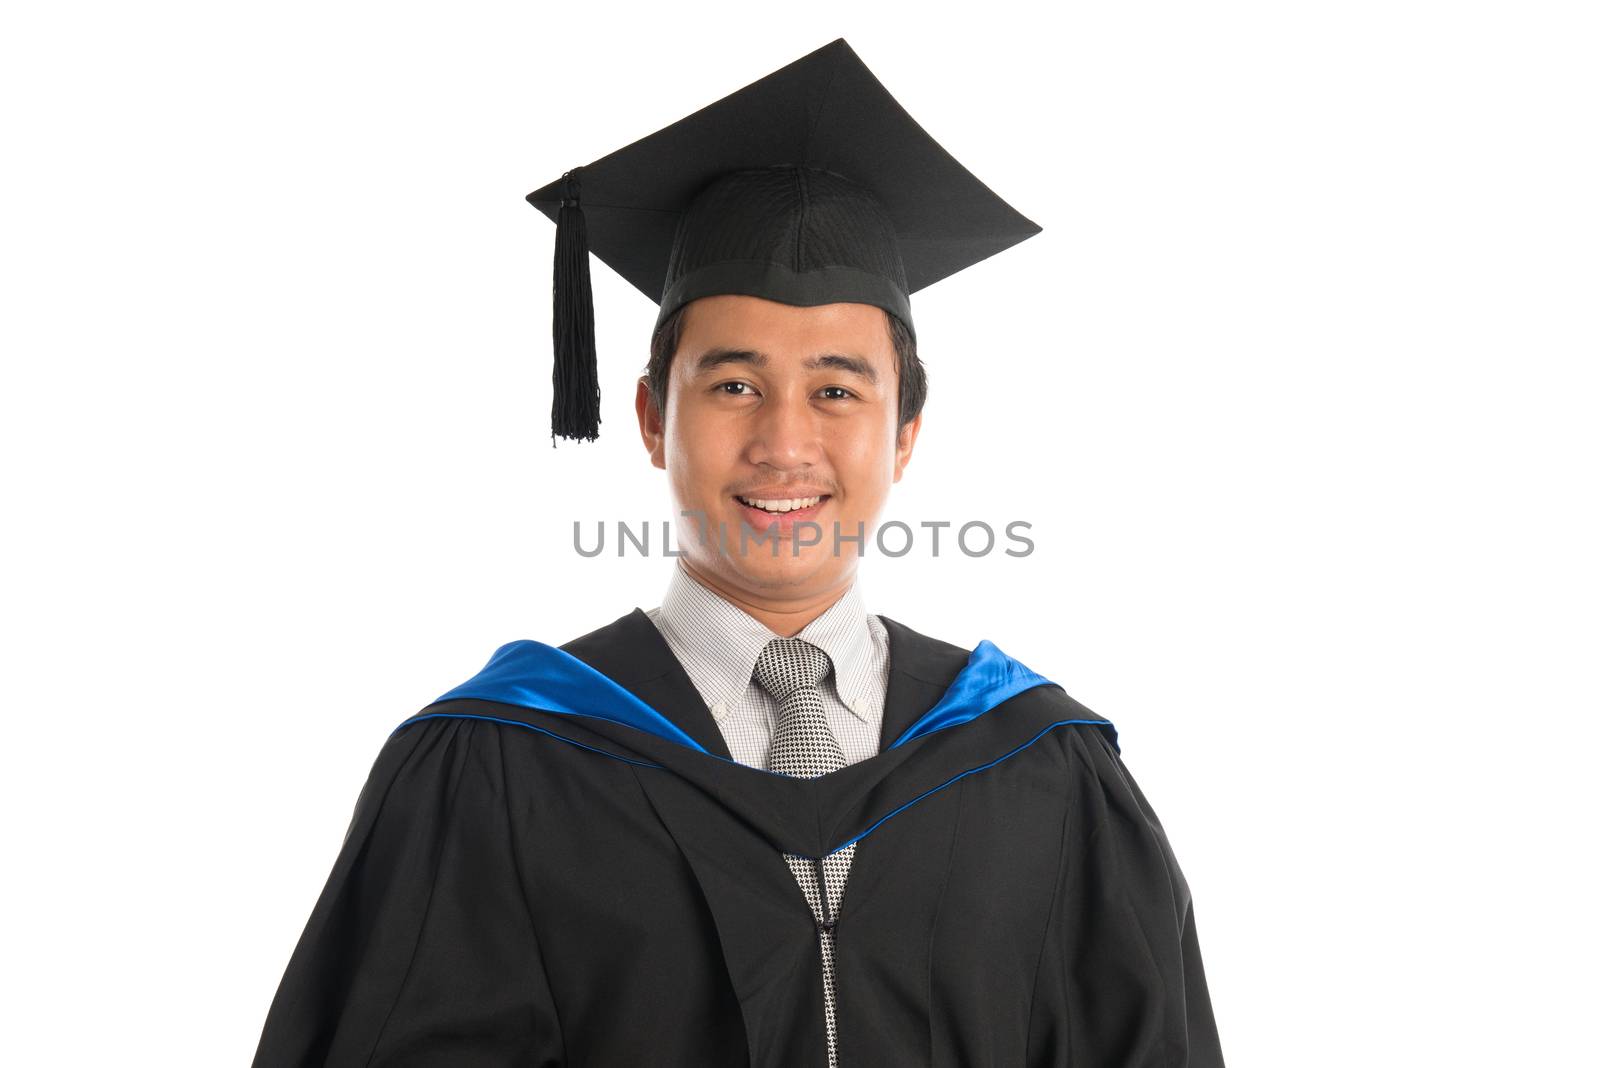 University student graduation portrait by szefei